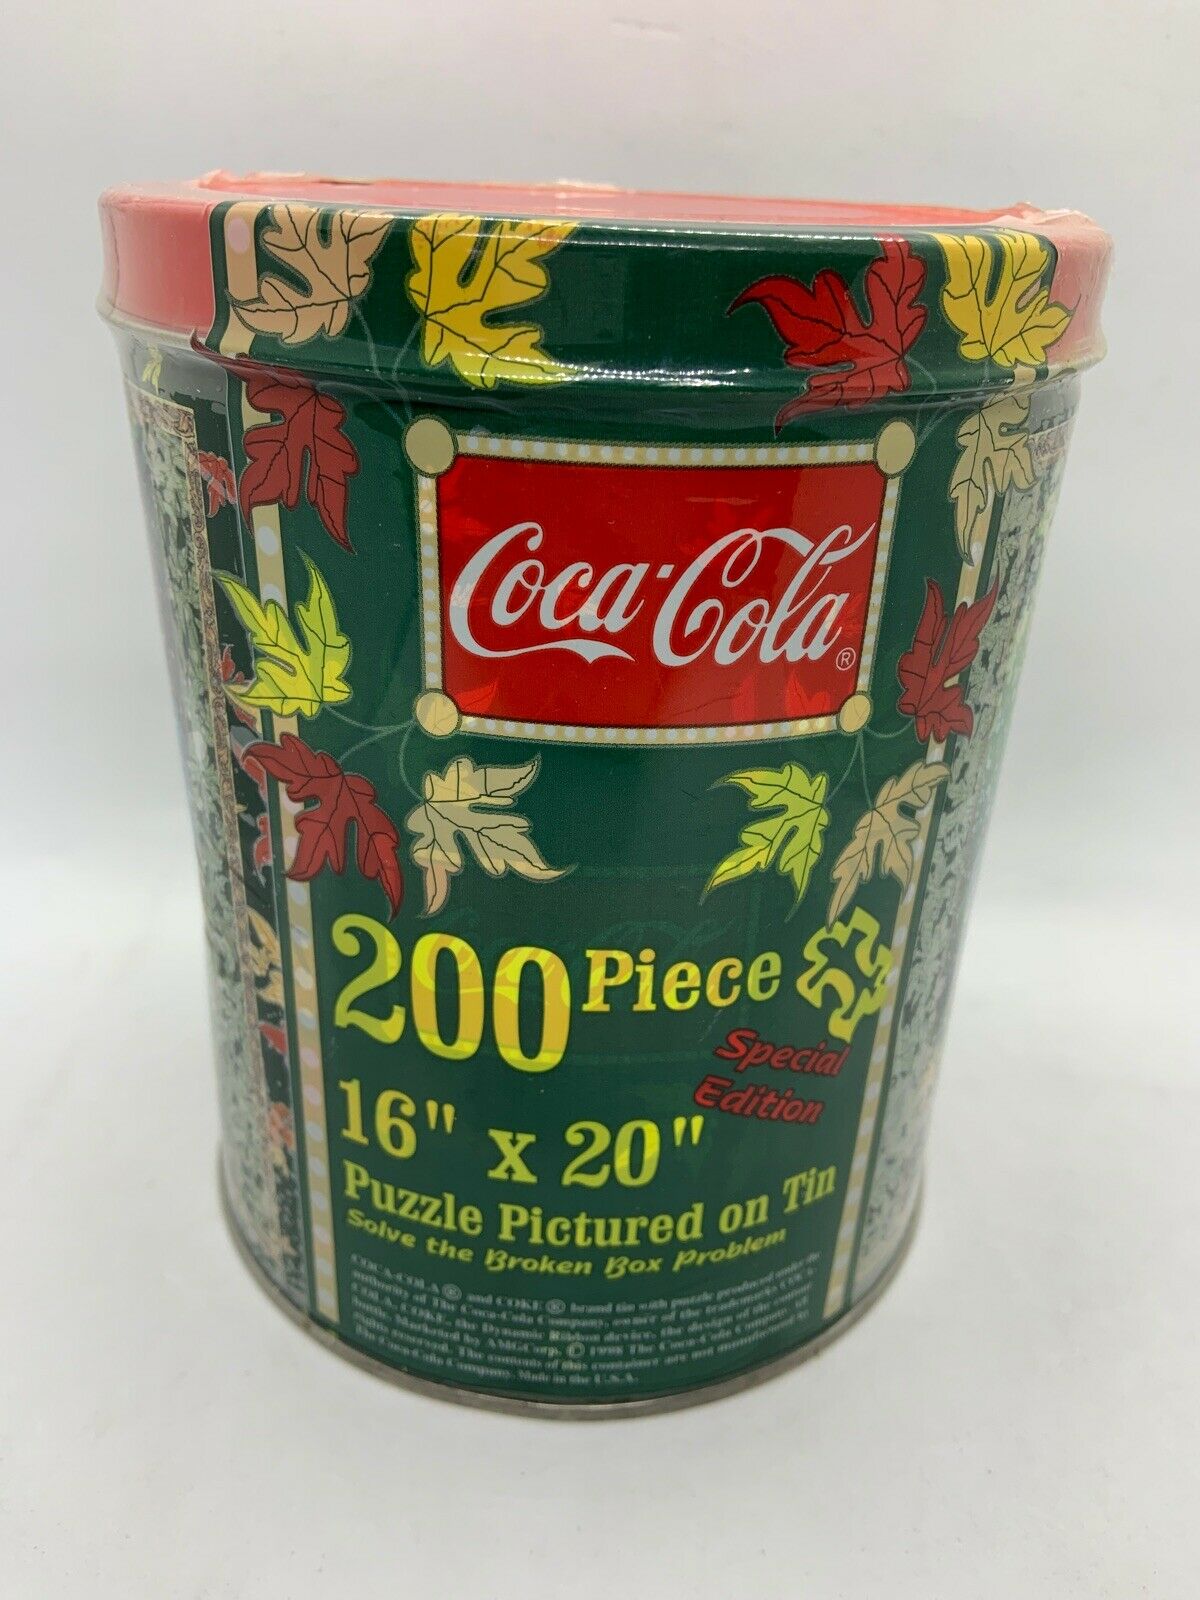 Coca-cola 200 Piece Special Edition Puzzle Vintage Tin 16" X 20" Ages 8+ New